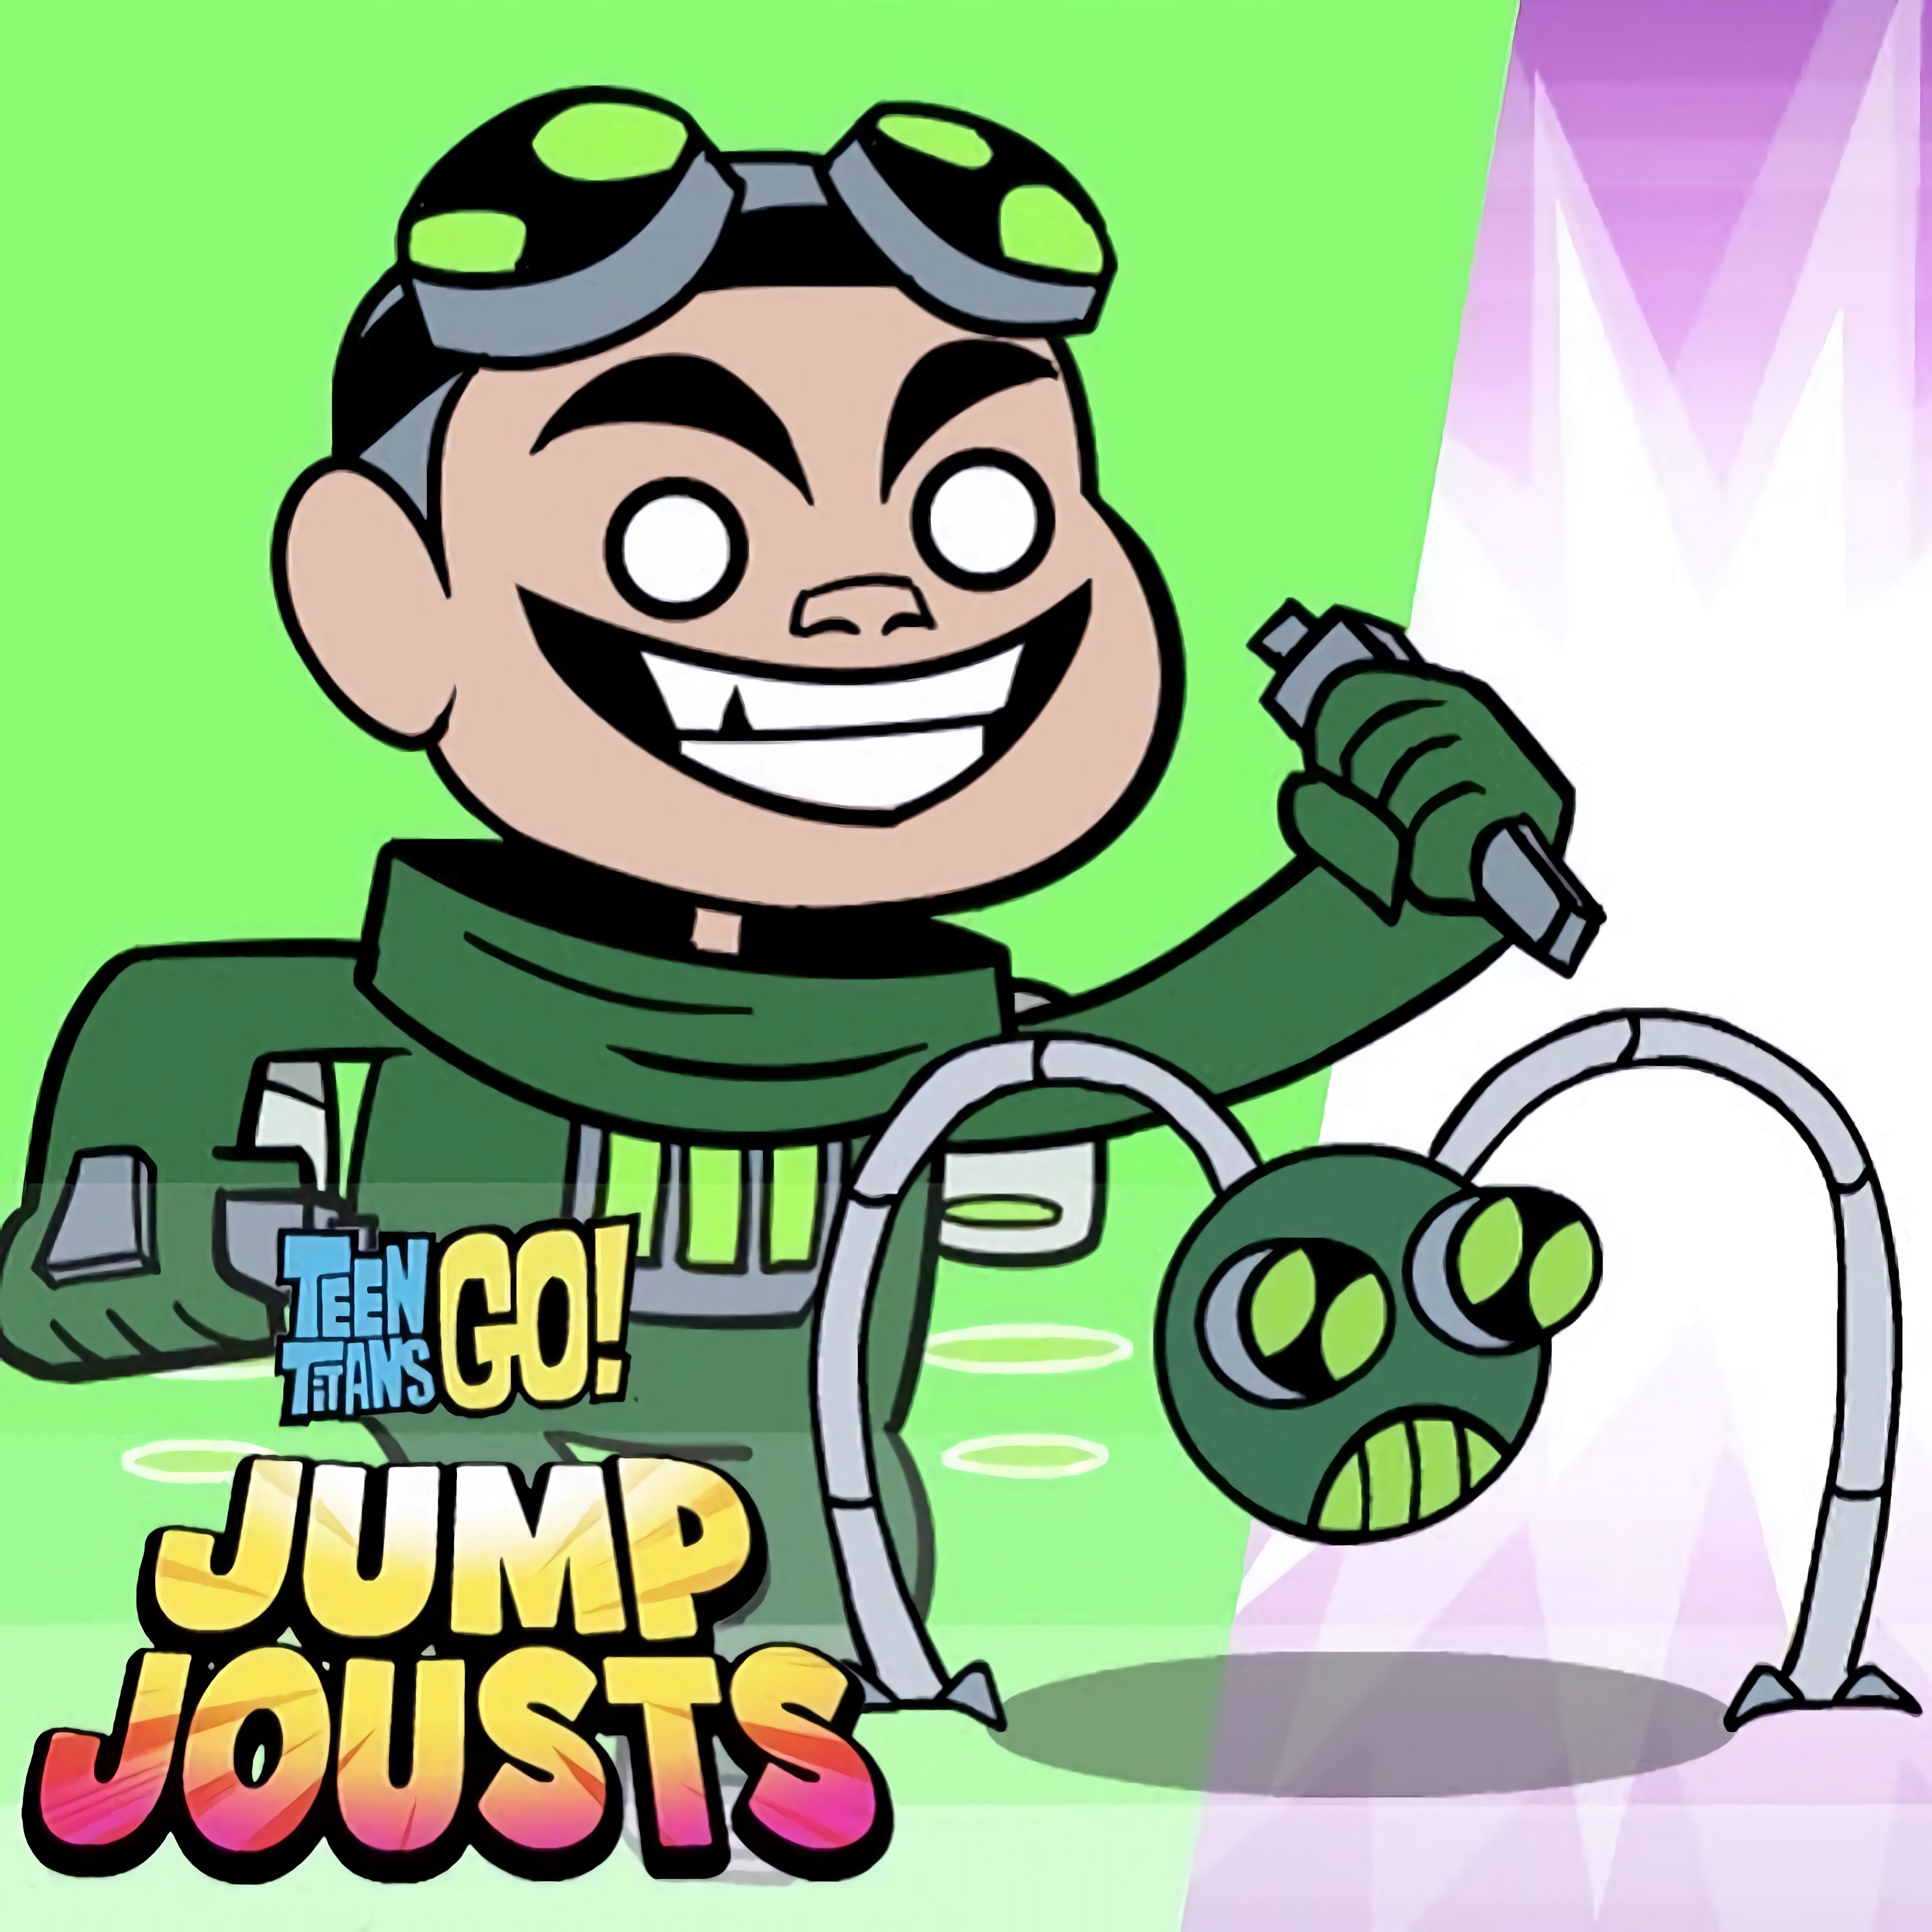 Jump Jousts - Teen Titans Go!